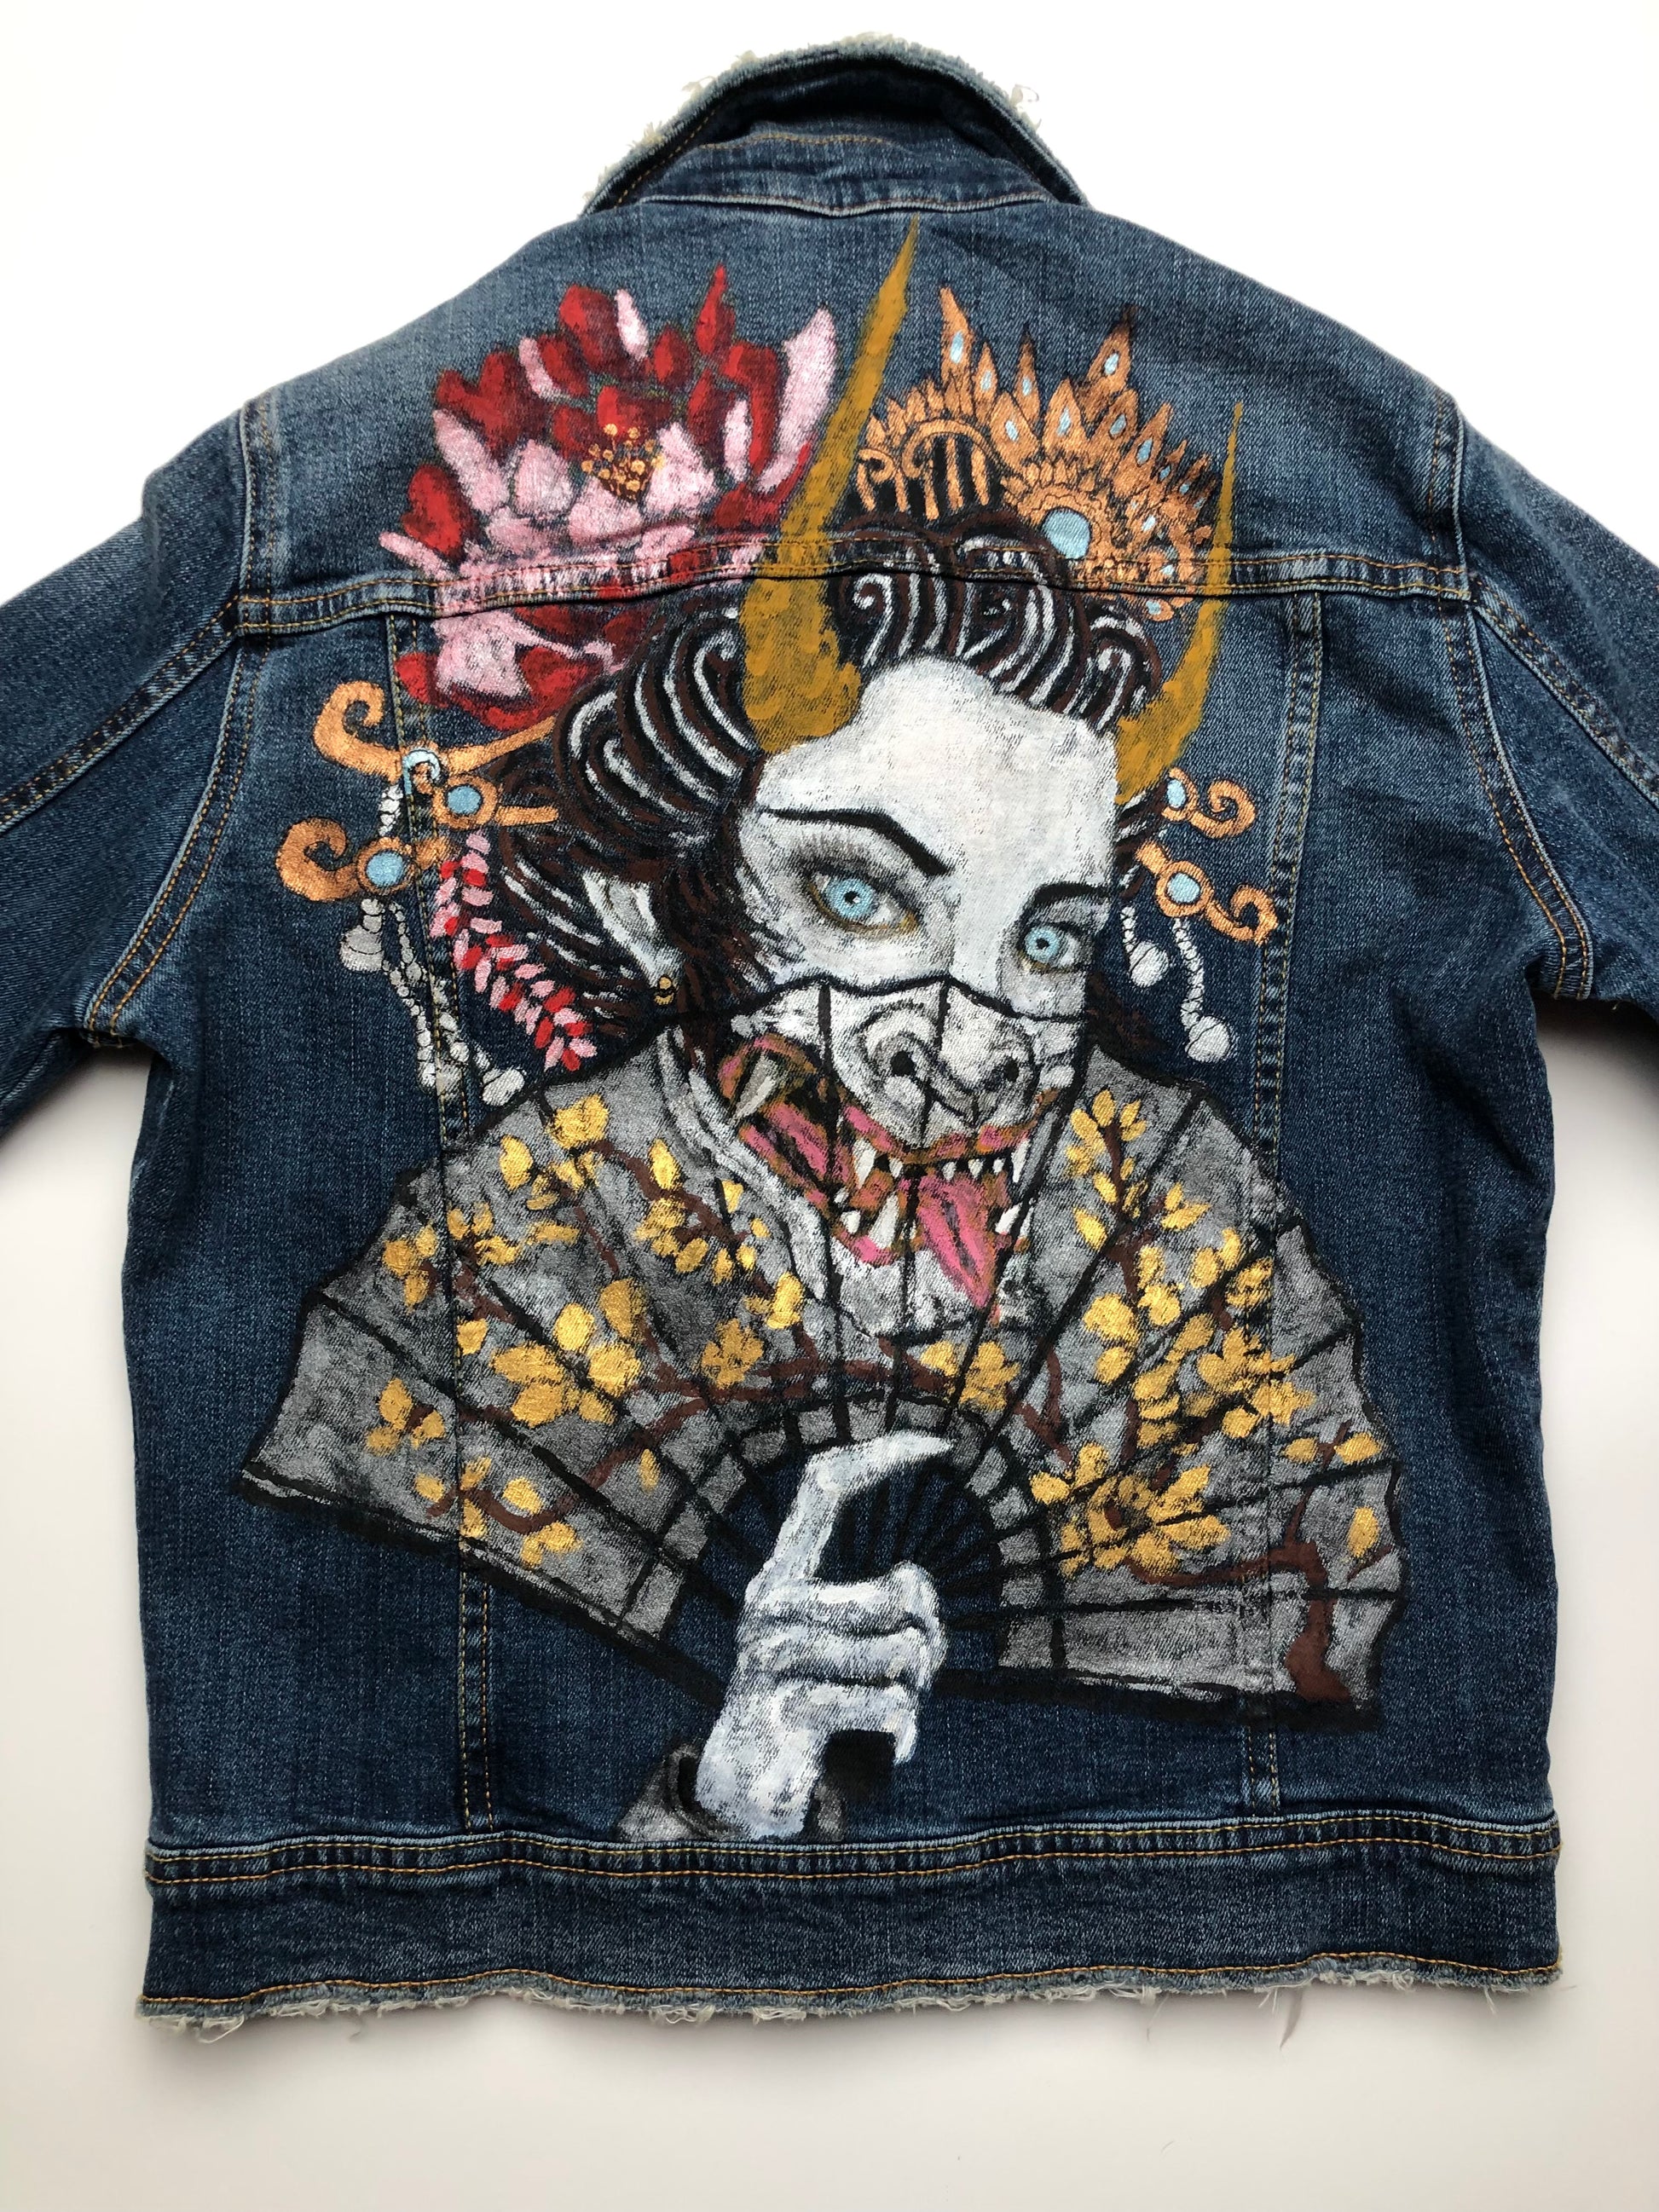 Beautiful drawing of a demon on an elite women's denim jacket